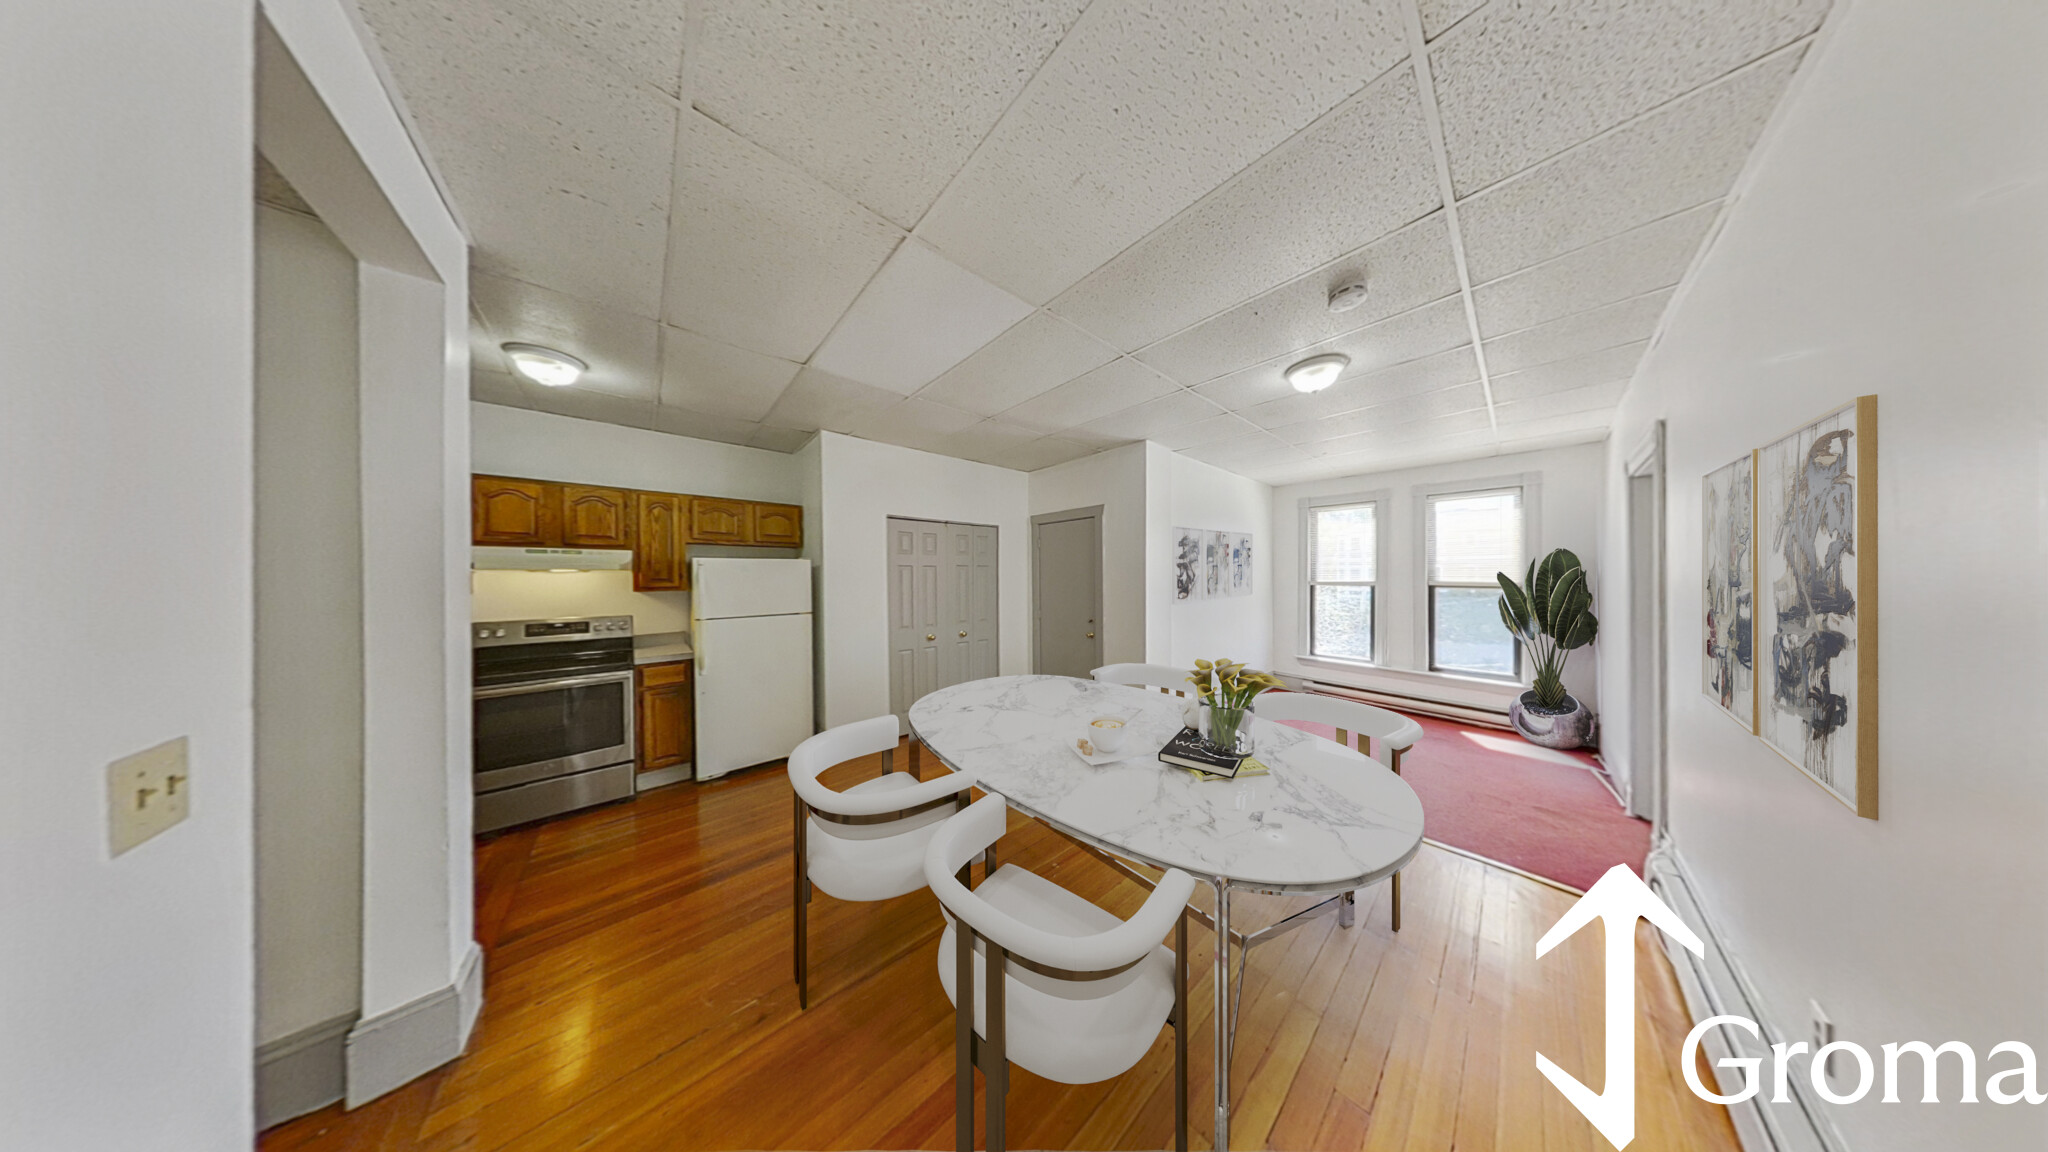 Photos of apartment on Hammond St.,Boston MA 02120